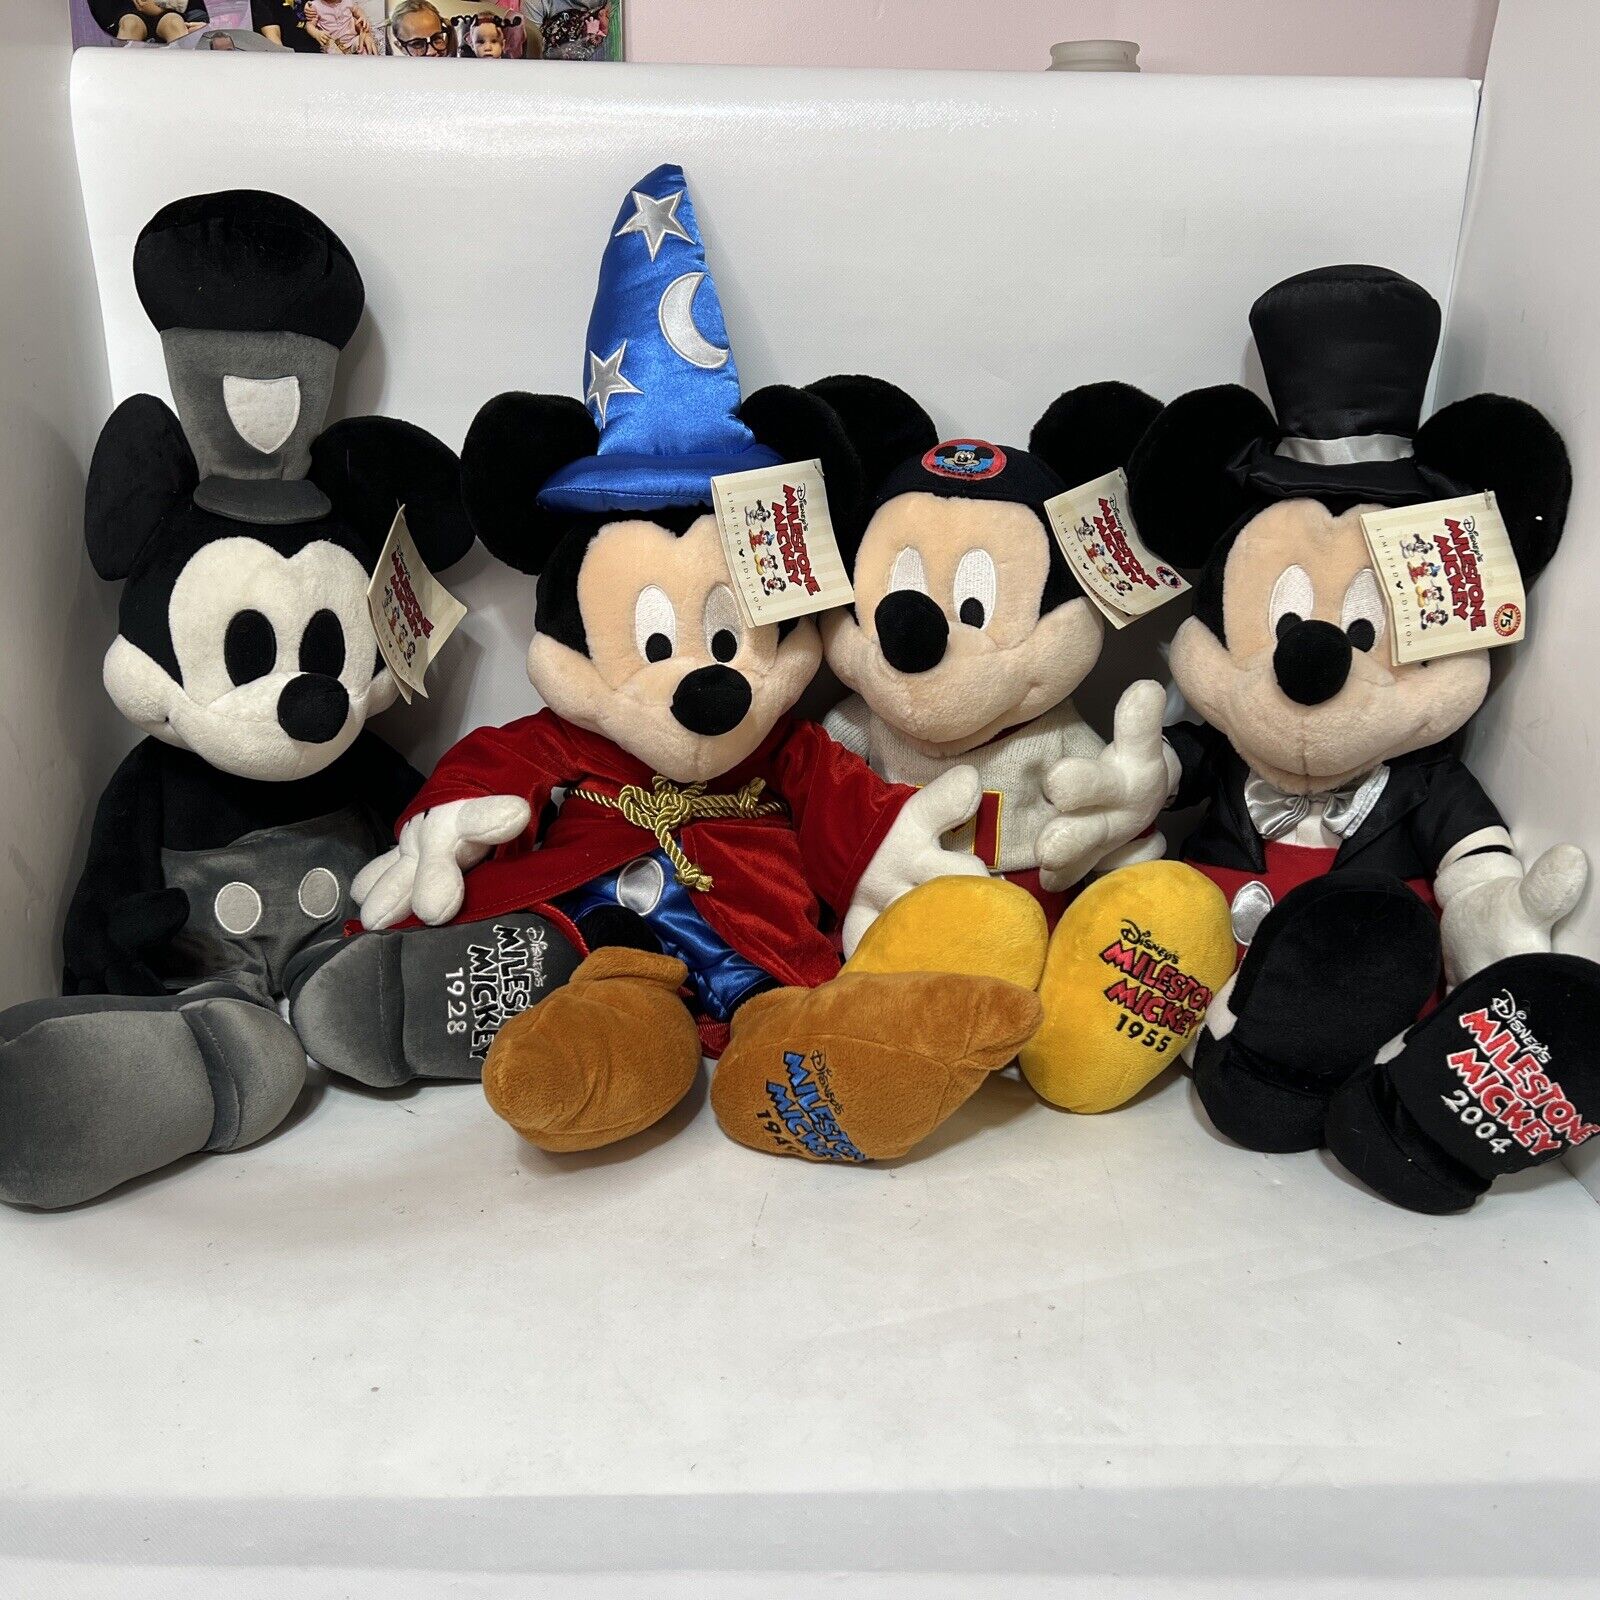 NEW- Disney Milestone Mickey - Limited Edition Complete Set 24” Plush Toys